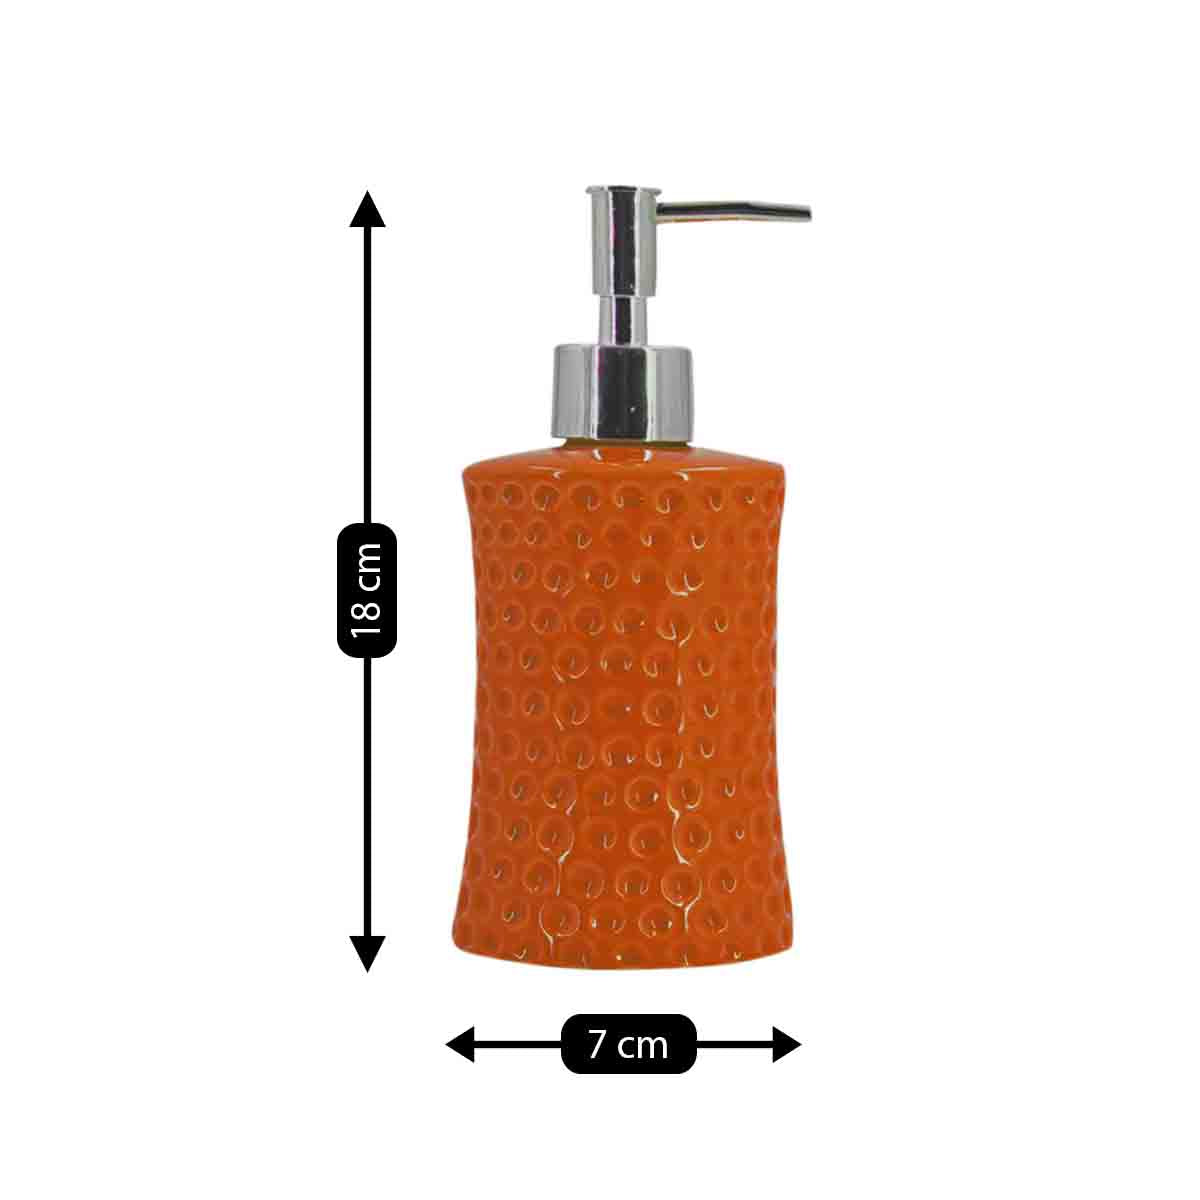 Ceramic Soap Dispenser Pump for Bathroom for Bath Gel, Lotion, Shampoo (8043)